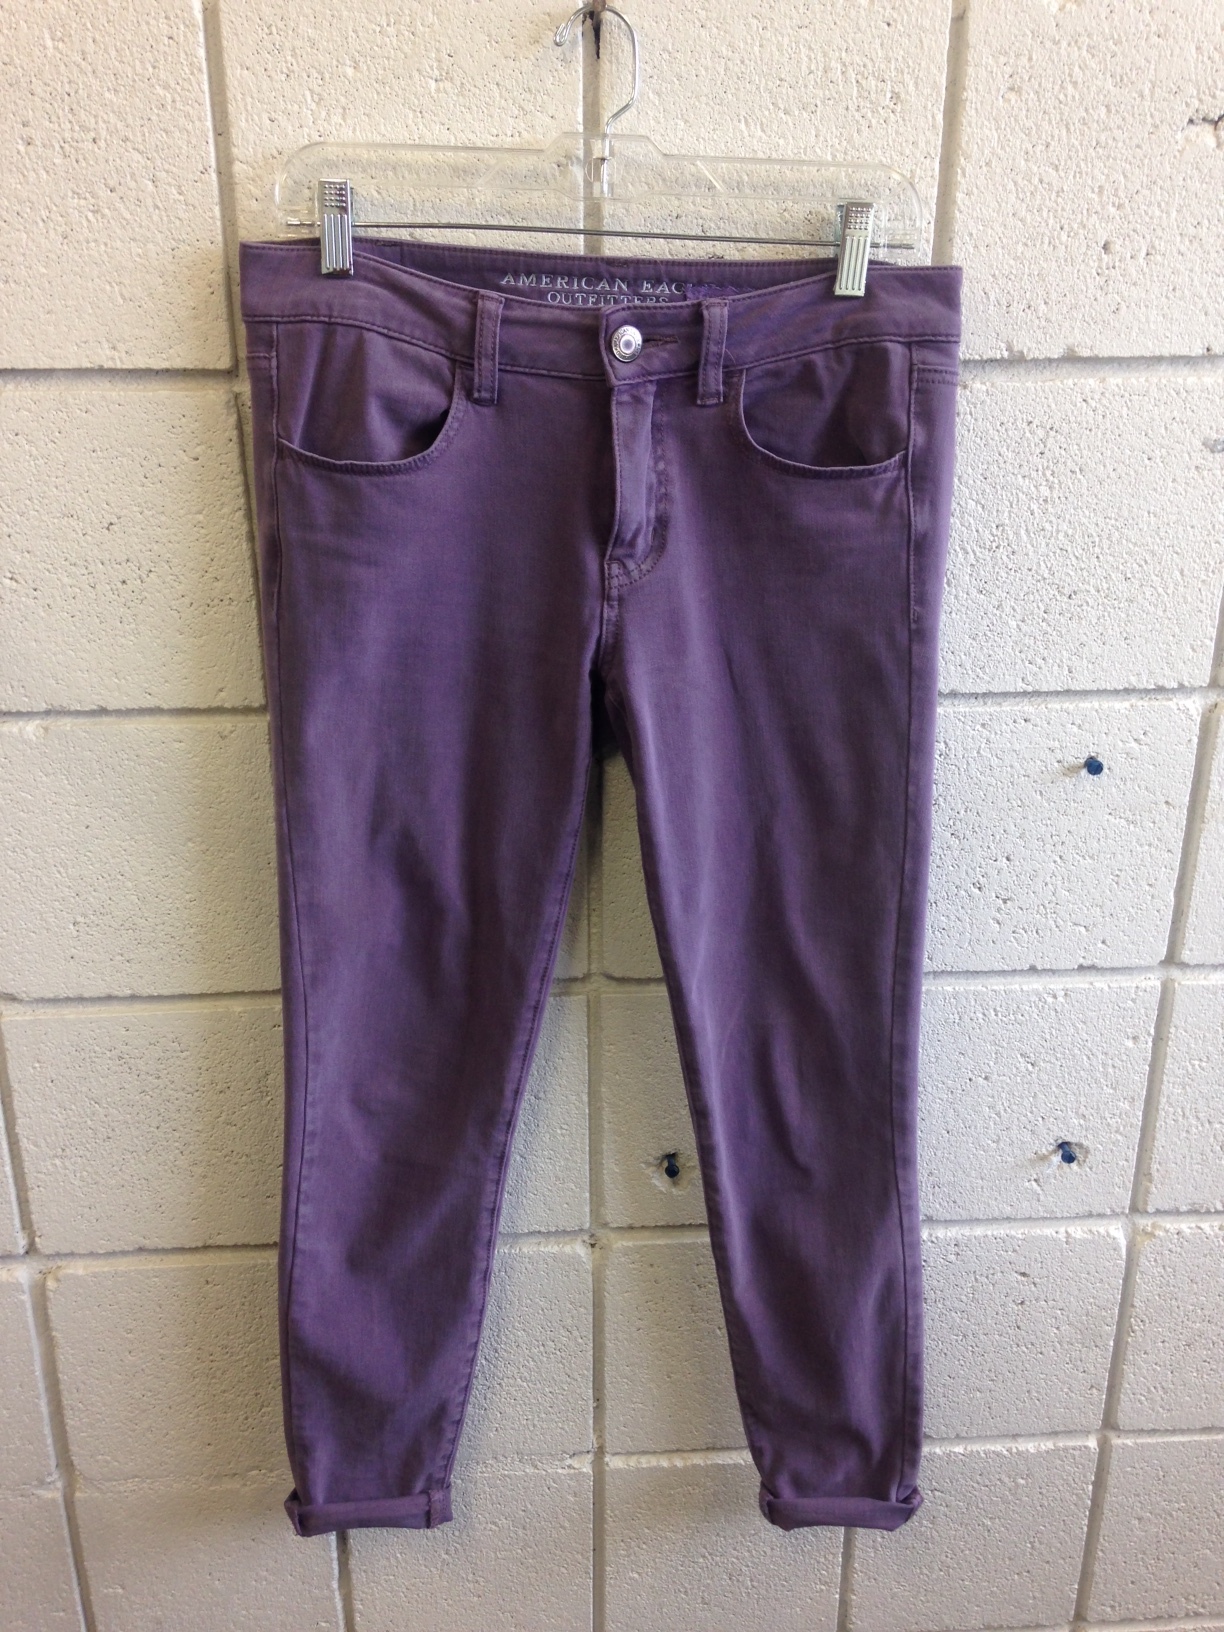 Denim Jeans Dyed Purple